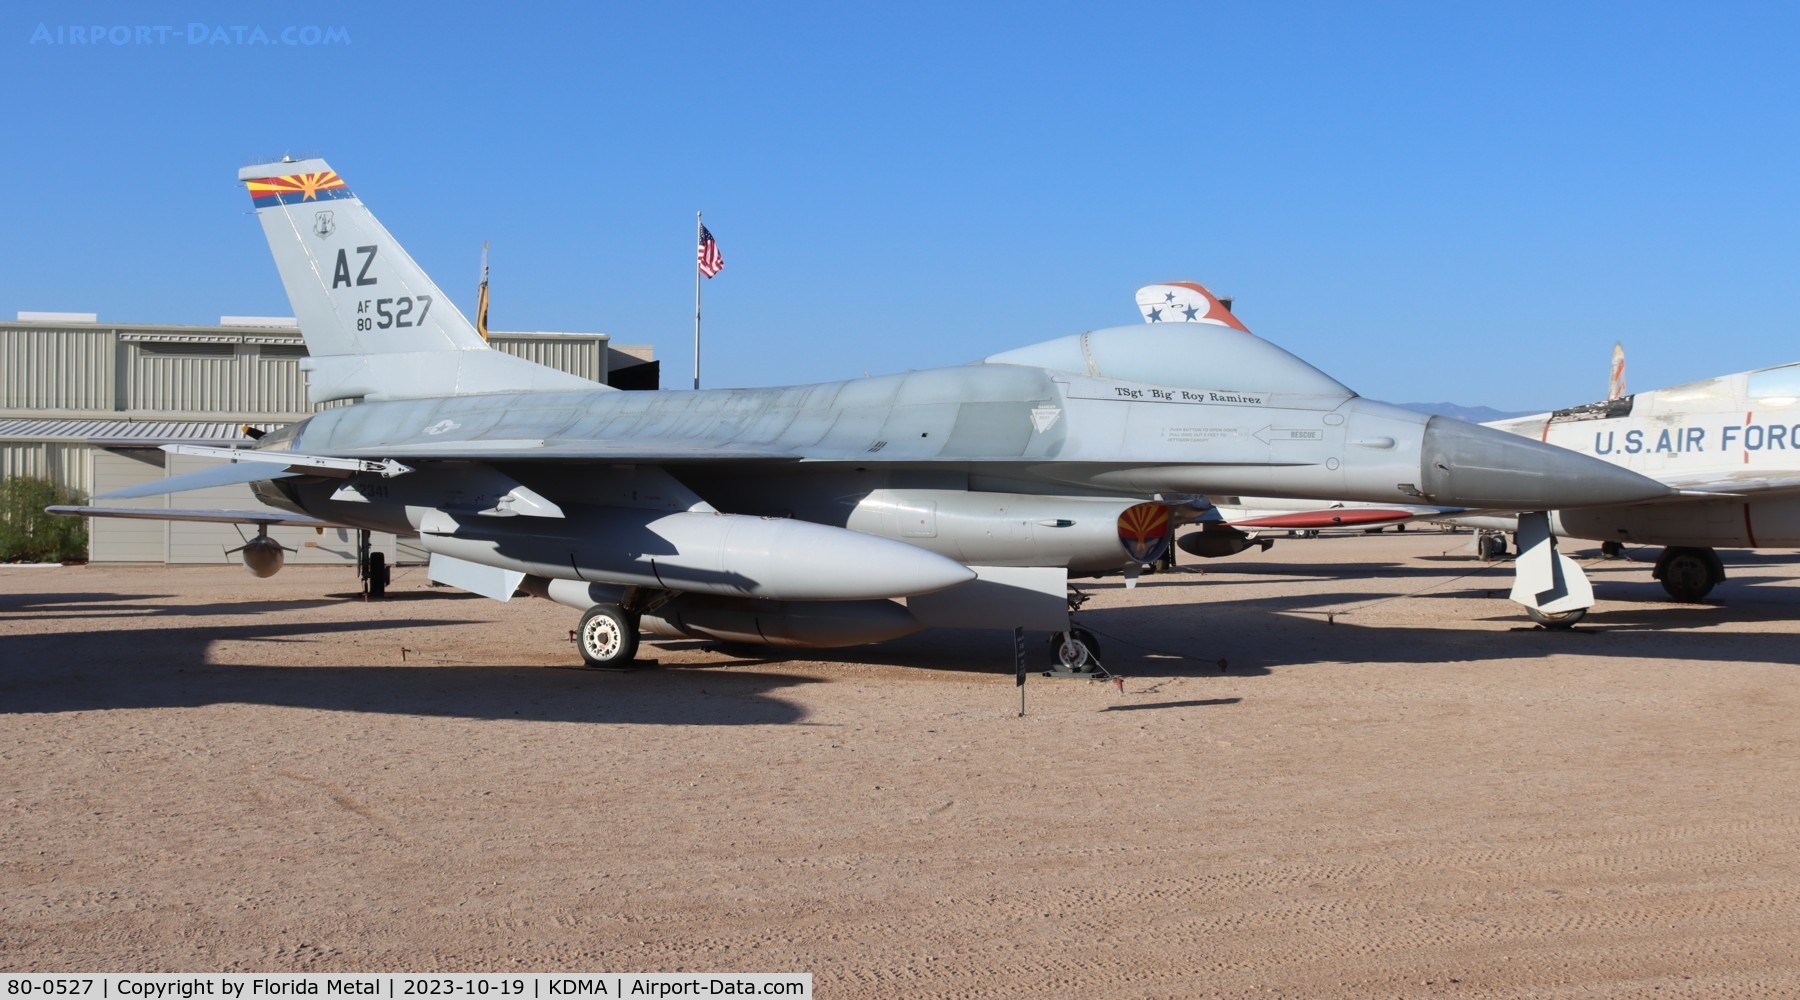 80-0527, 1980 General Dynamics F-16A Fighting Falcon C/N 61-248, F-16A zx